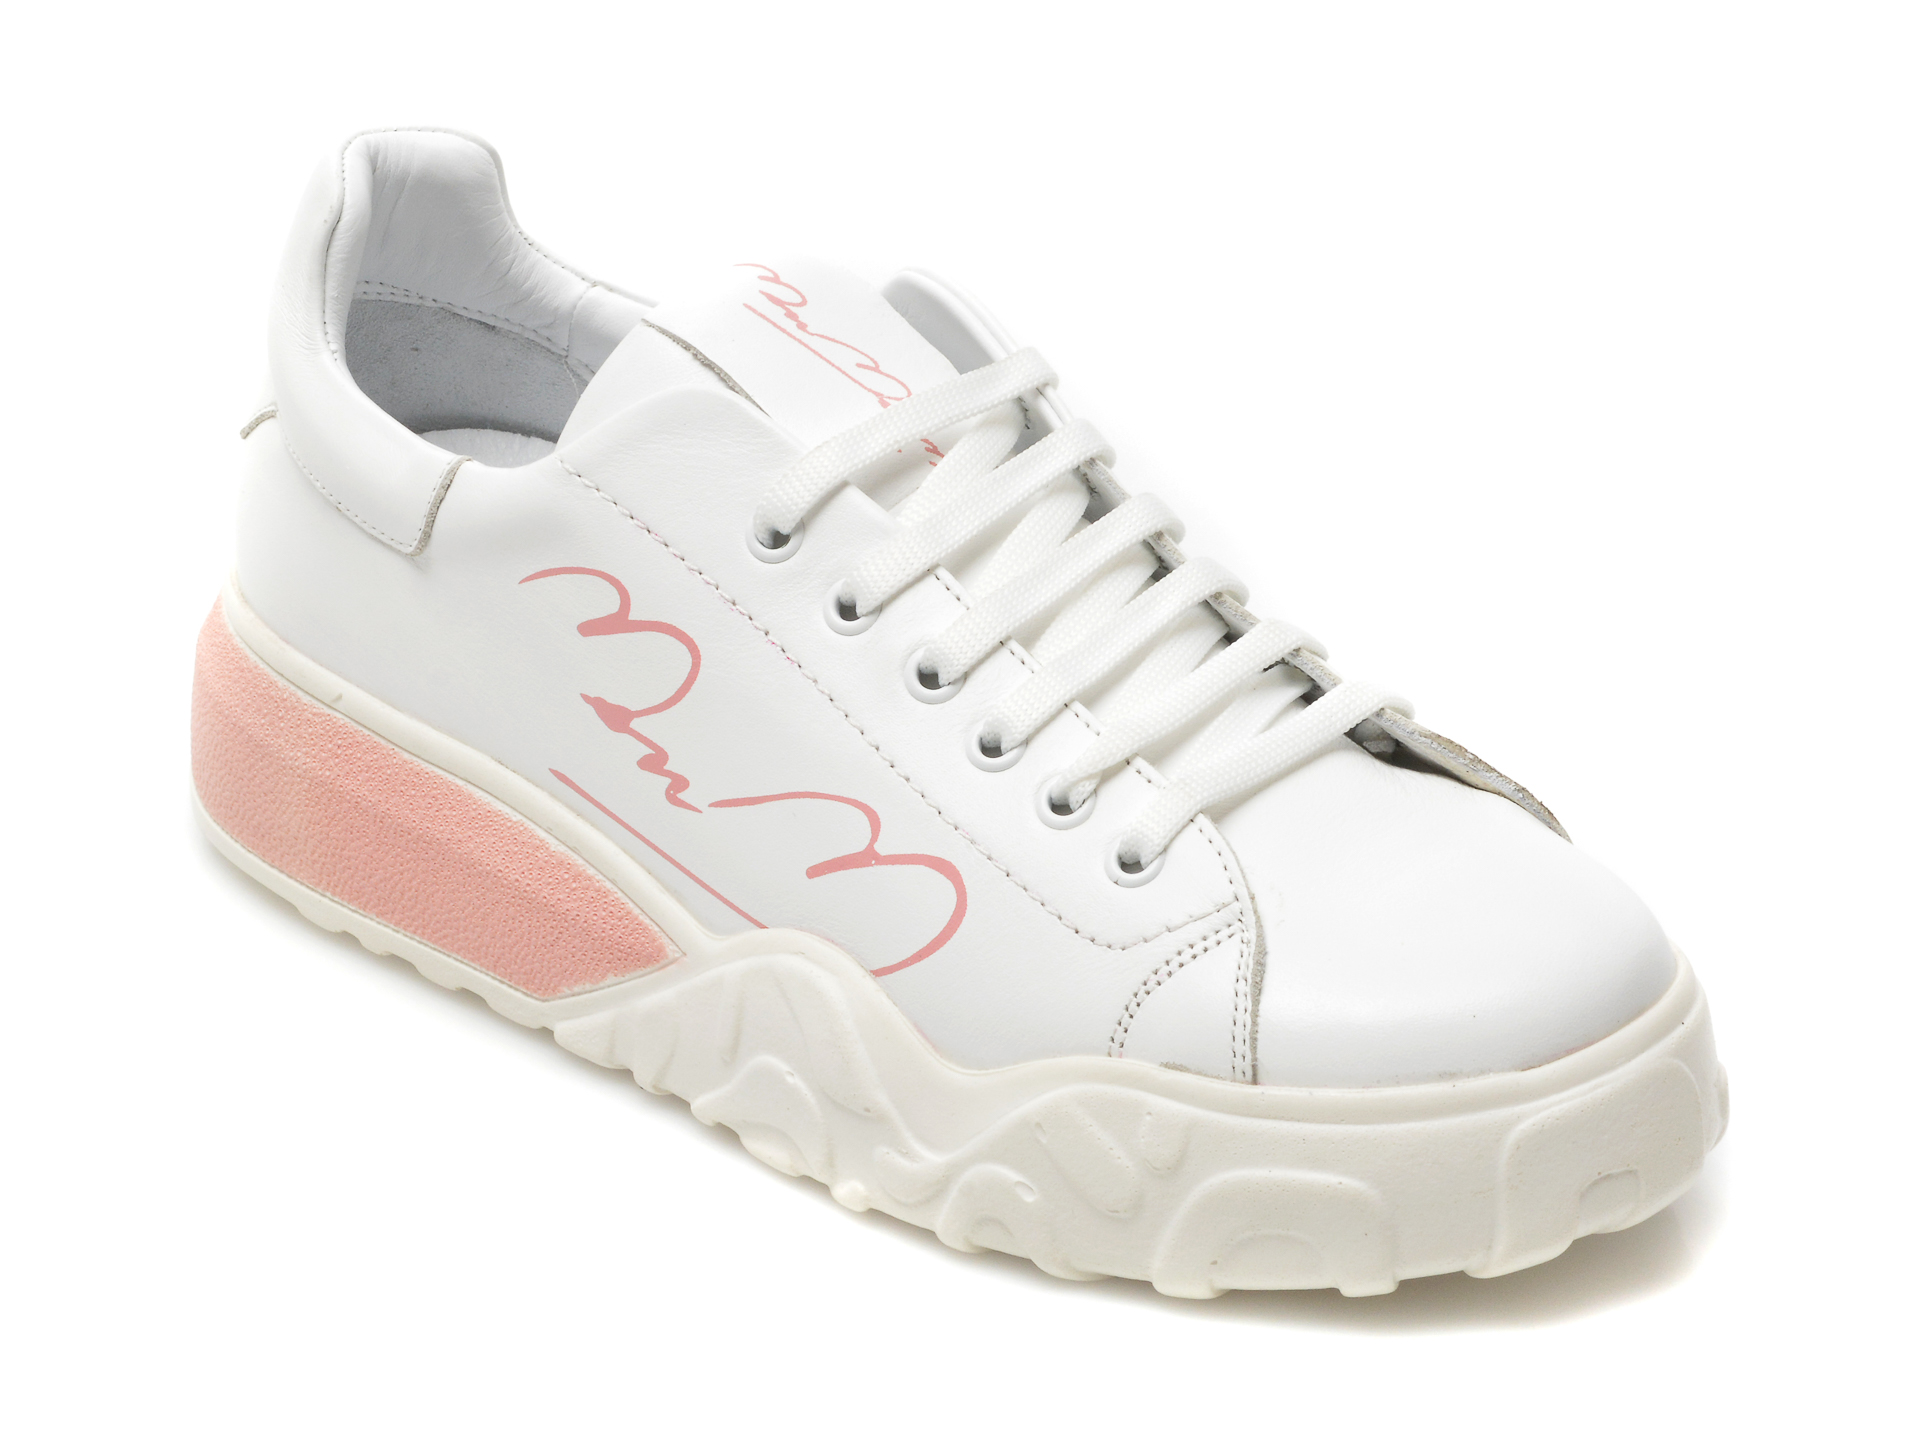 Pantofi sport MAGNOLYA albi, 141, din piele naturala MAGNOLYA